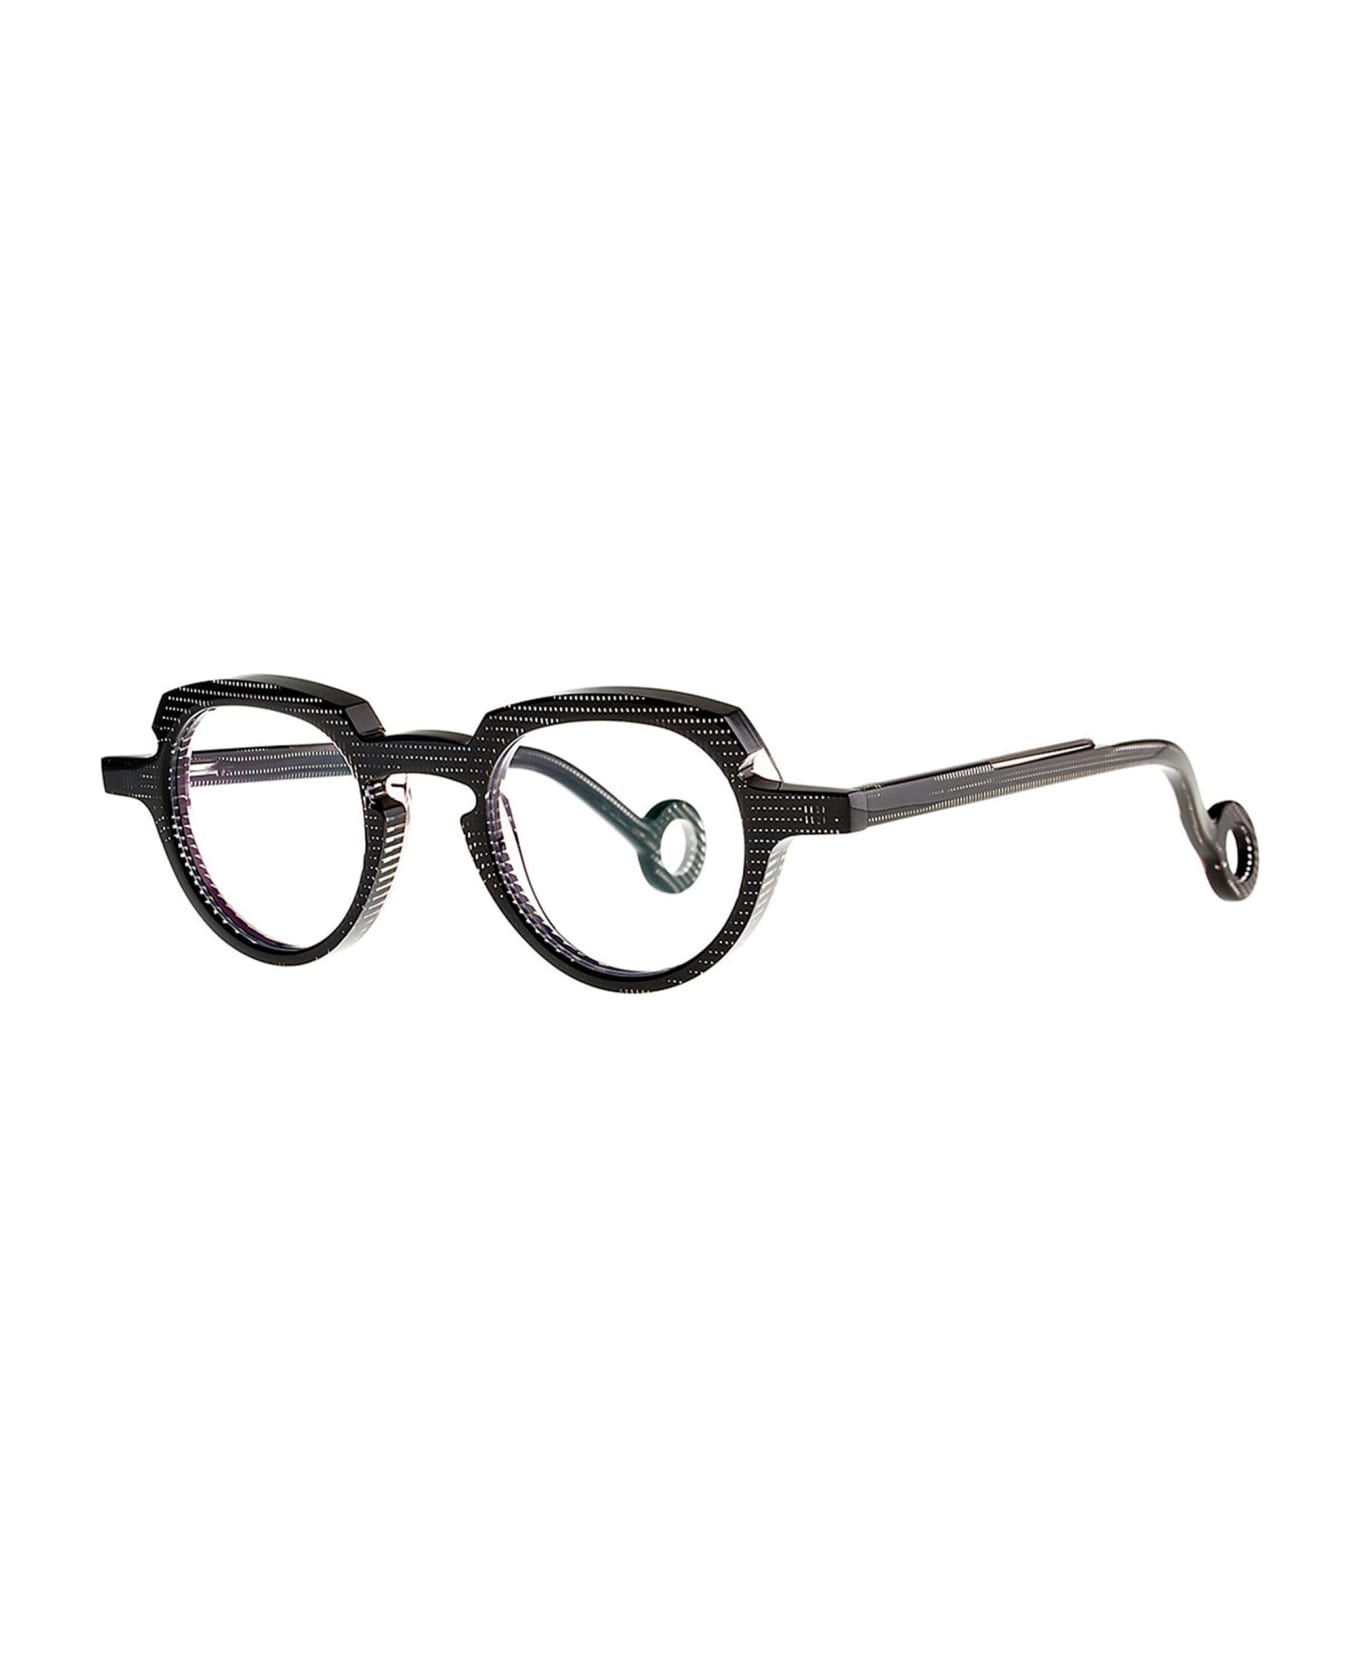 Theo Eyewear Andy - 015 Rx Glasses - Black アイウェア